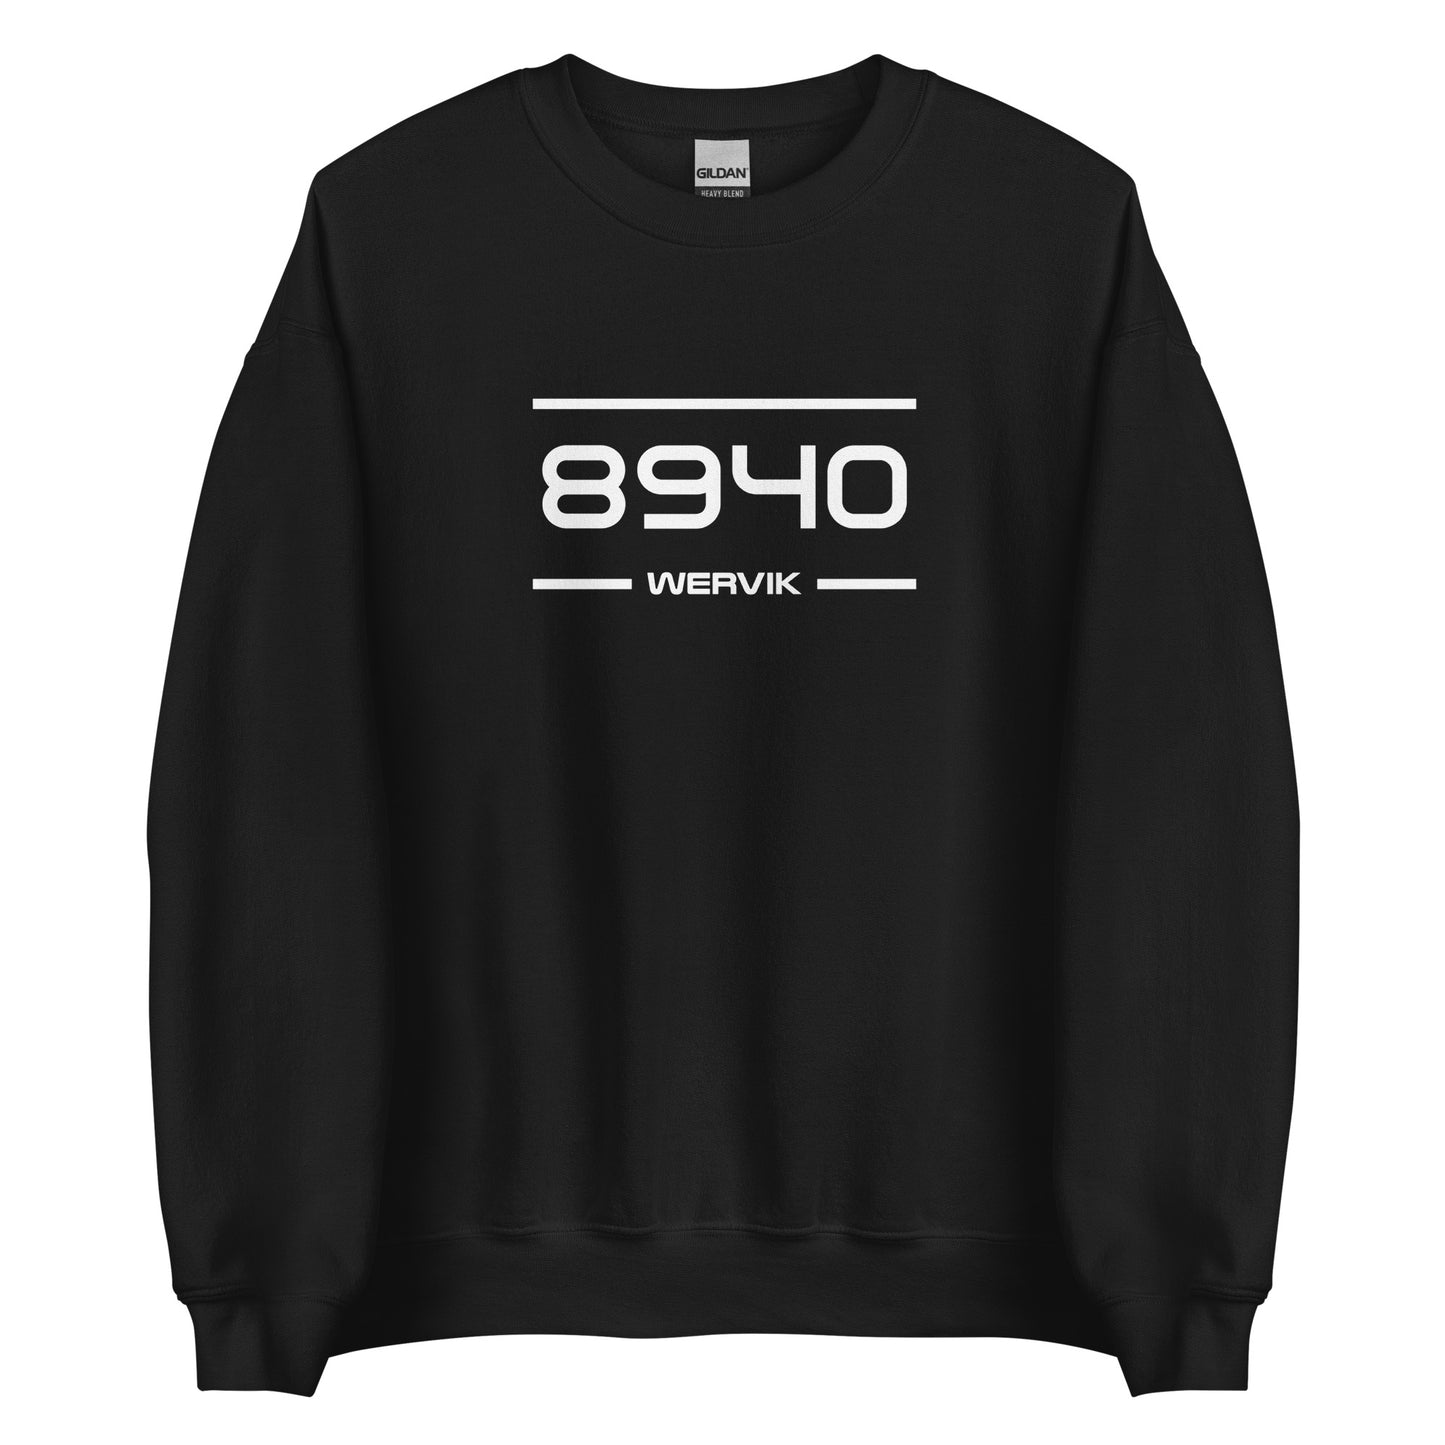 Sweater - 8940 - Wervik (M/V)